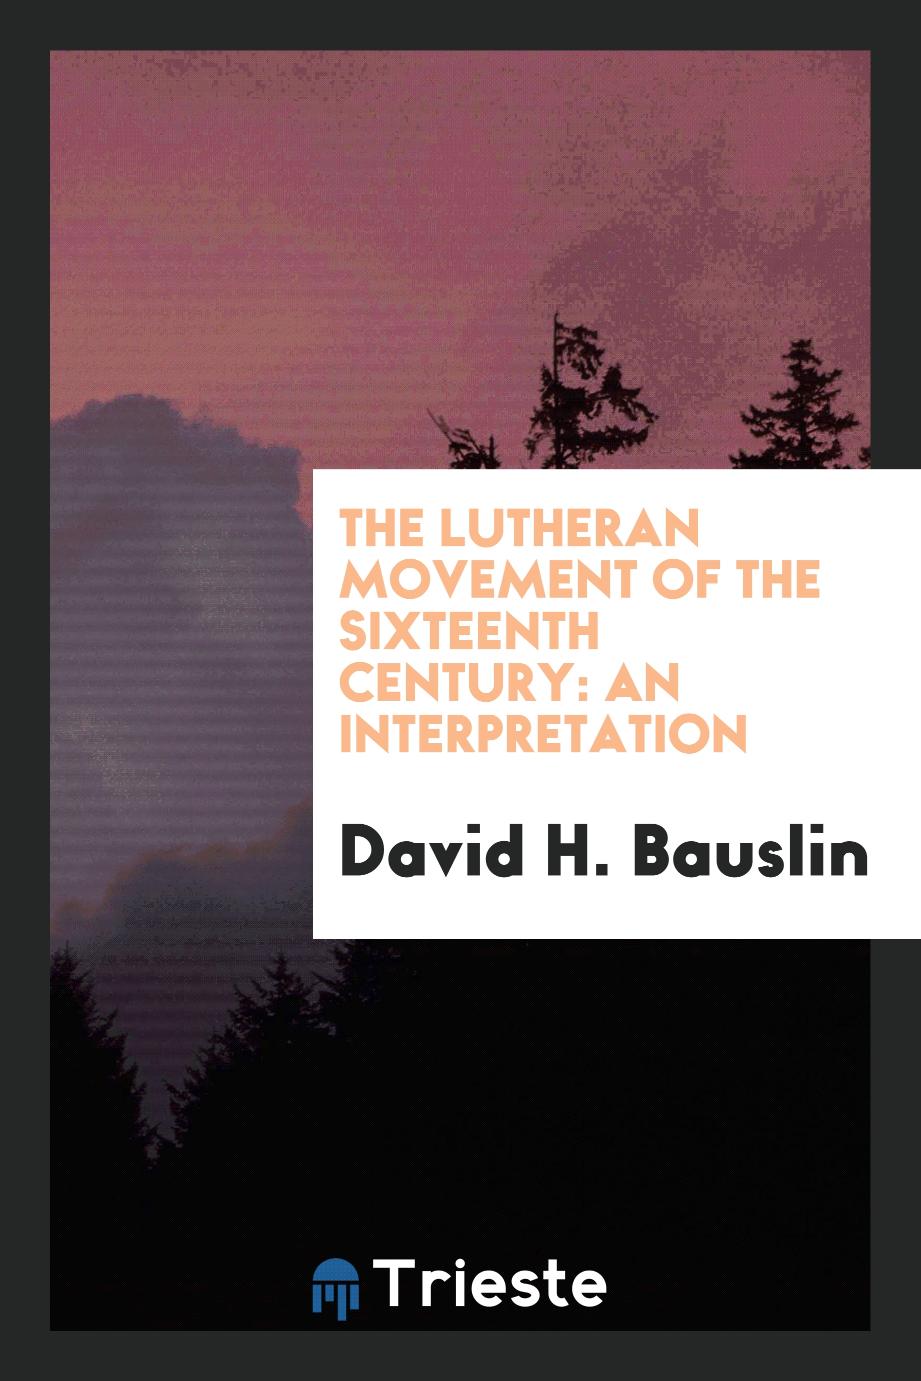 The Lutheran Movement of the Sixteenth Century: An Interpretation